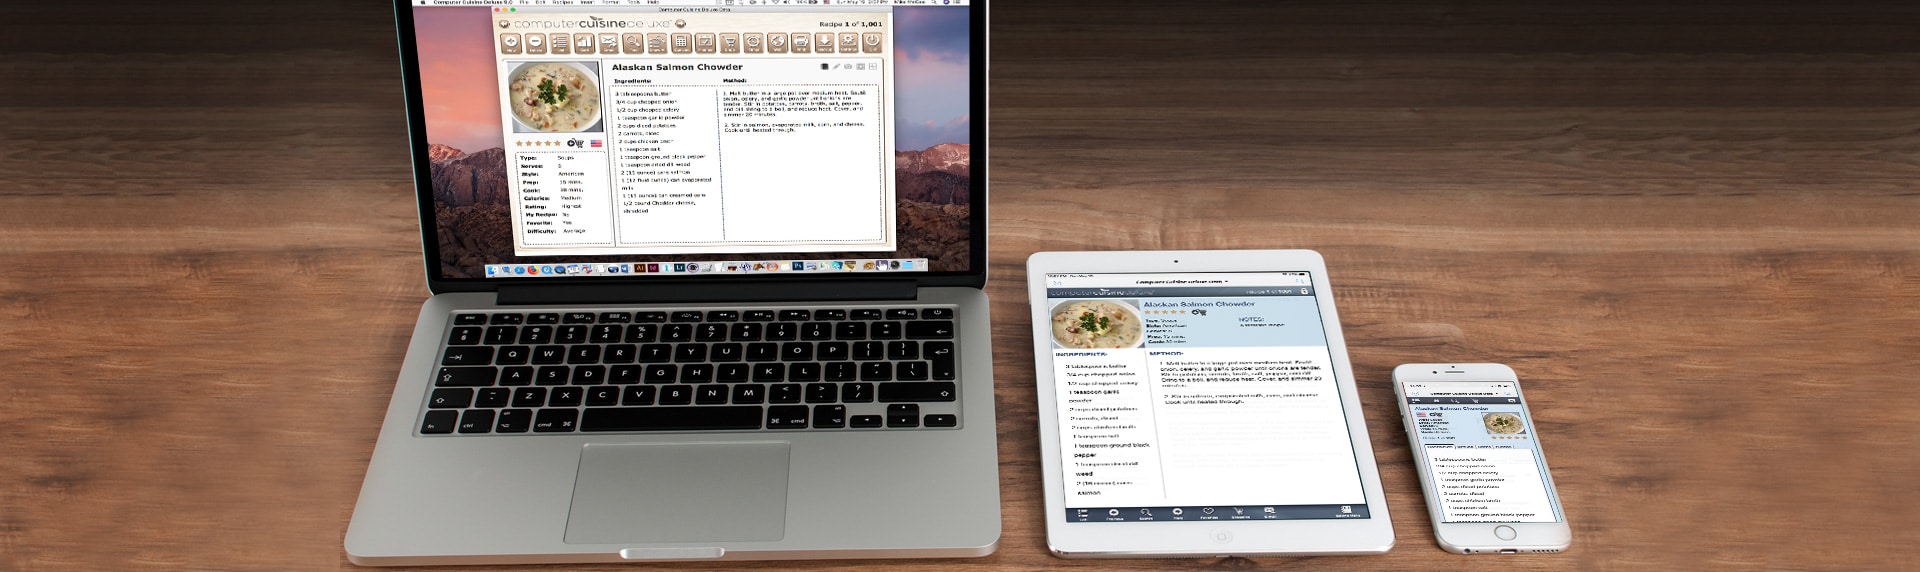 computer cuisine laptop mac recipe software version 9 MacBook Pro iPad iphone